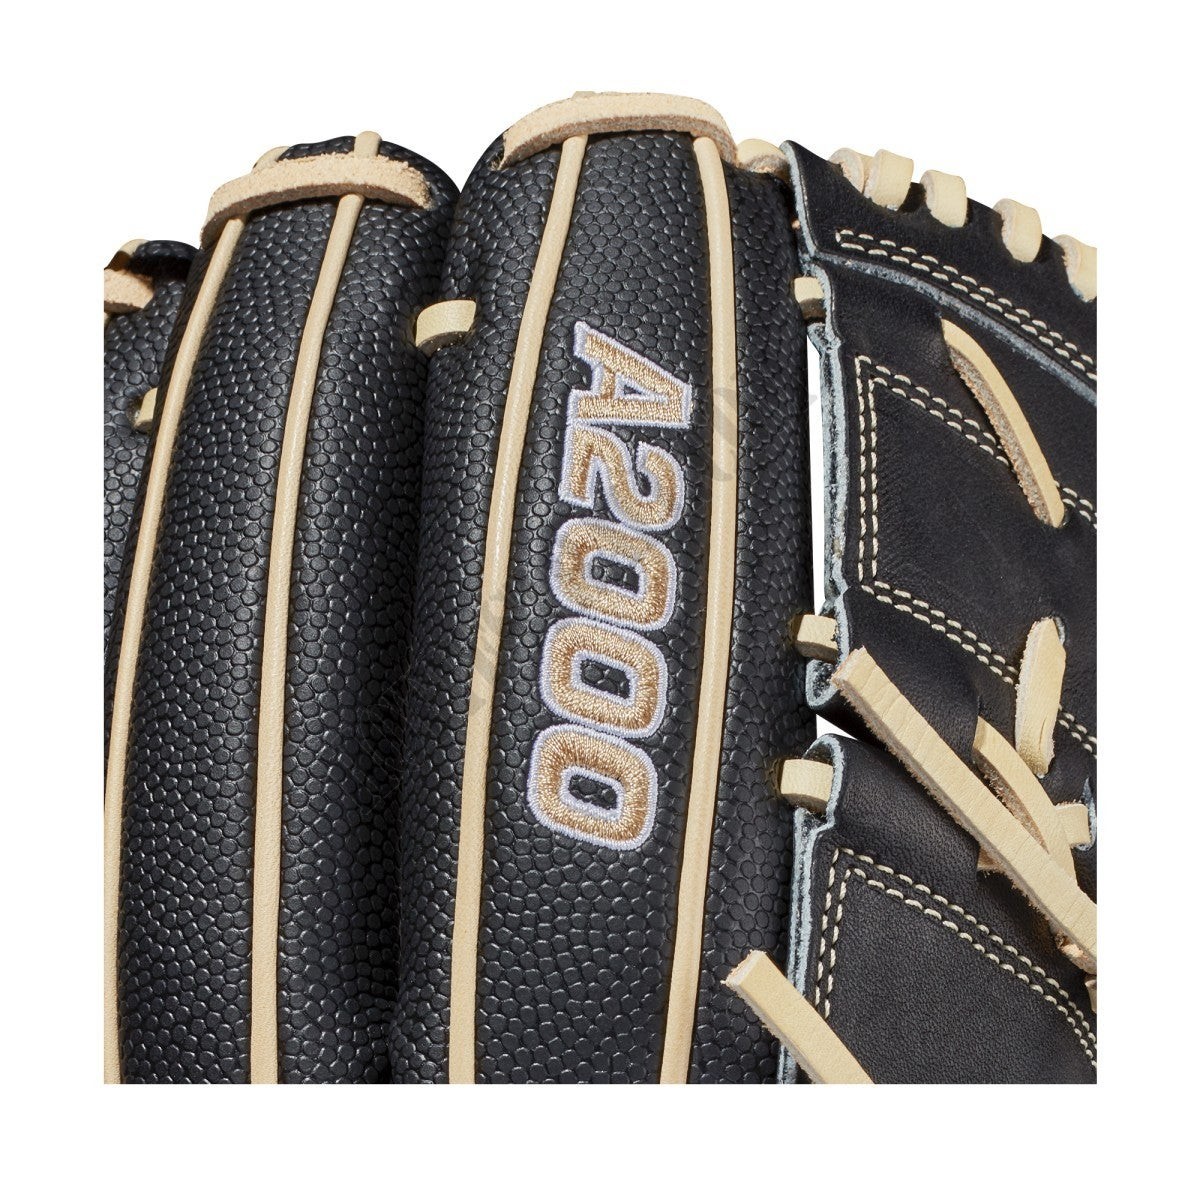 2021 A2000 B2SS 12" Pitcher's Baseball Glove ● Wilson Promotions - -6